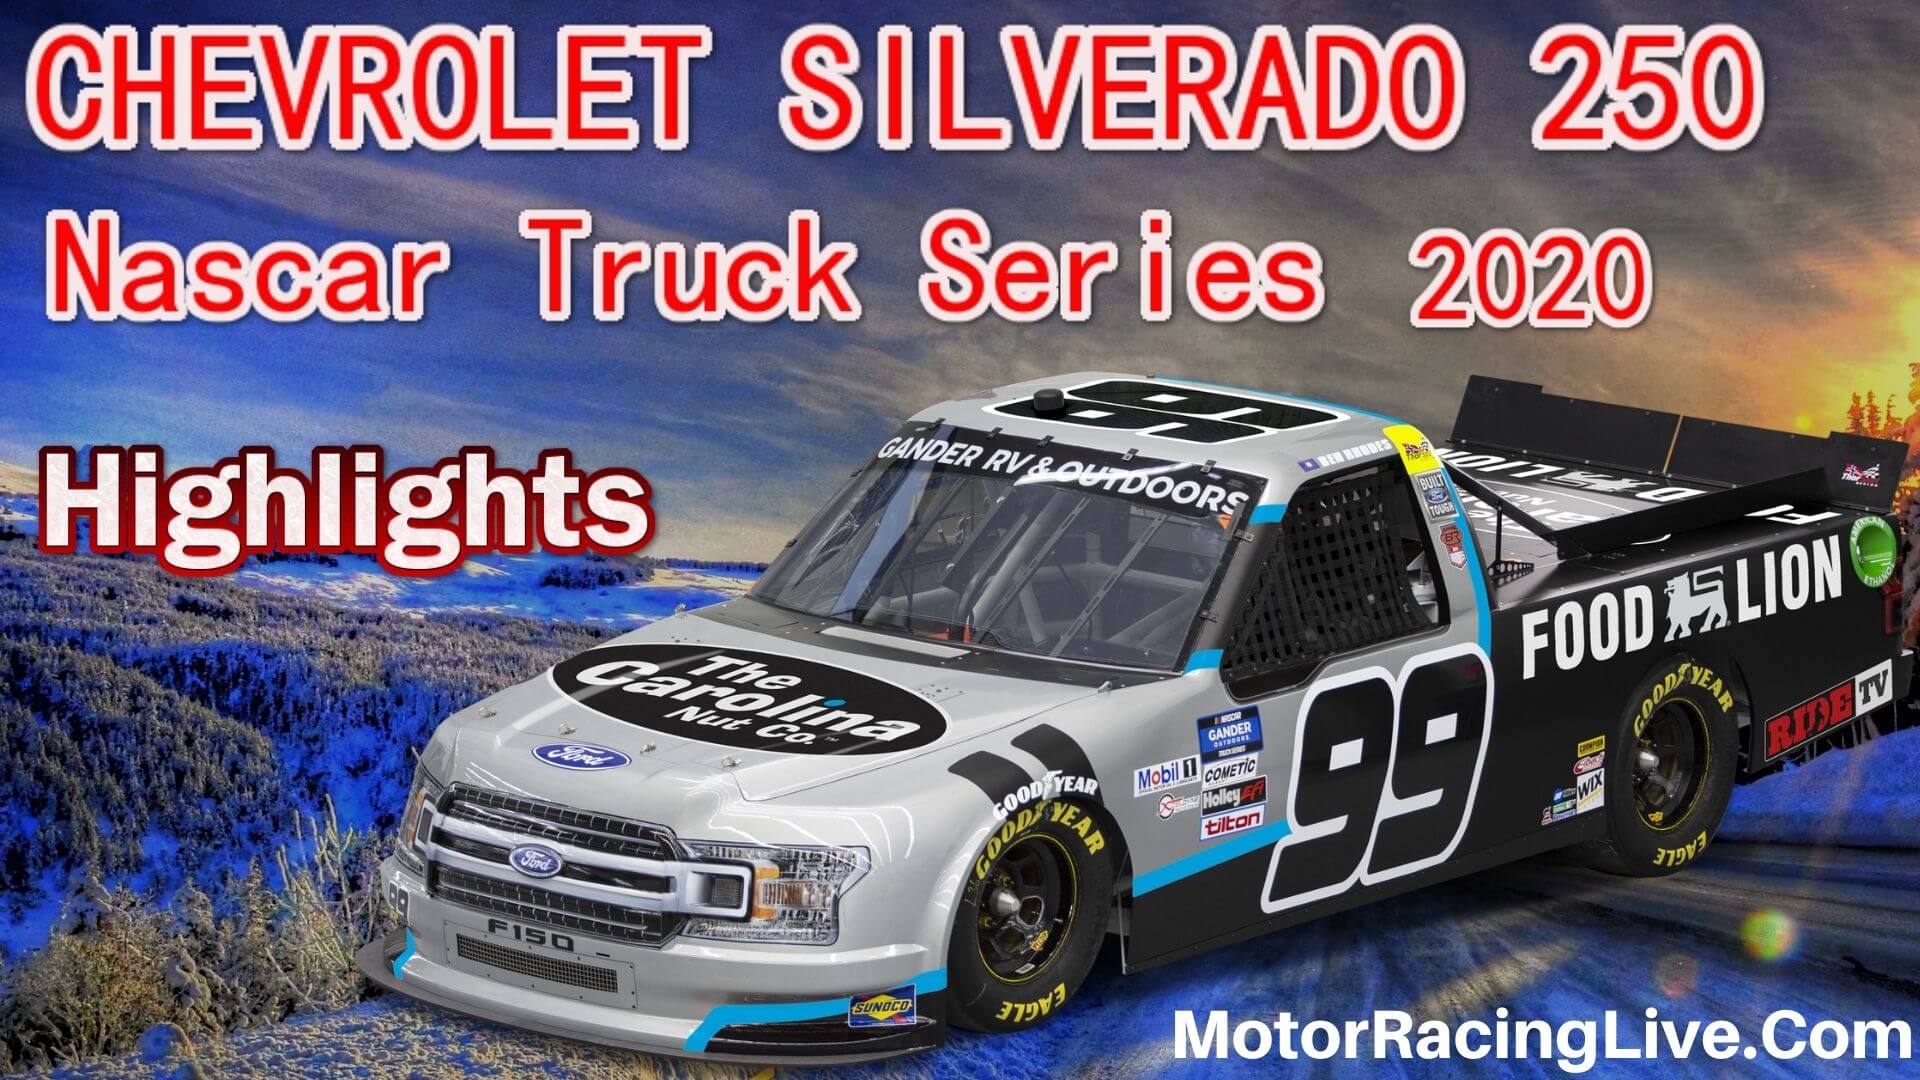 CHEVROLET SILVERADO 250 Highlights Nascar Truck Series 2020